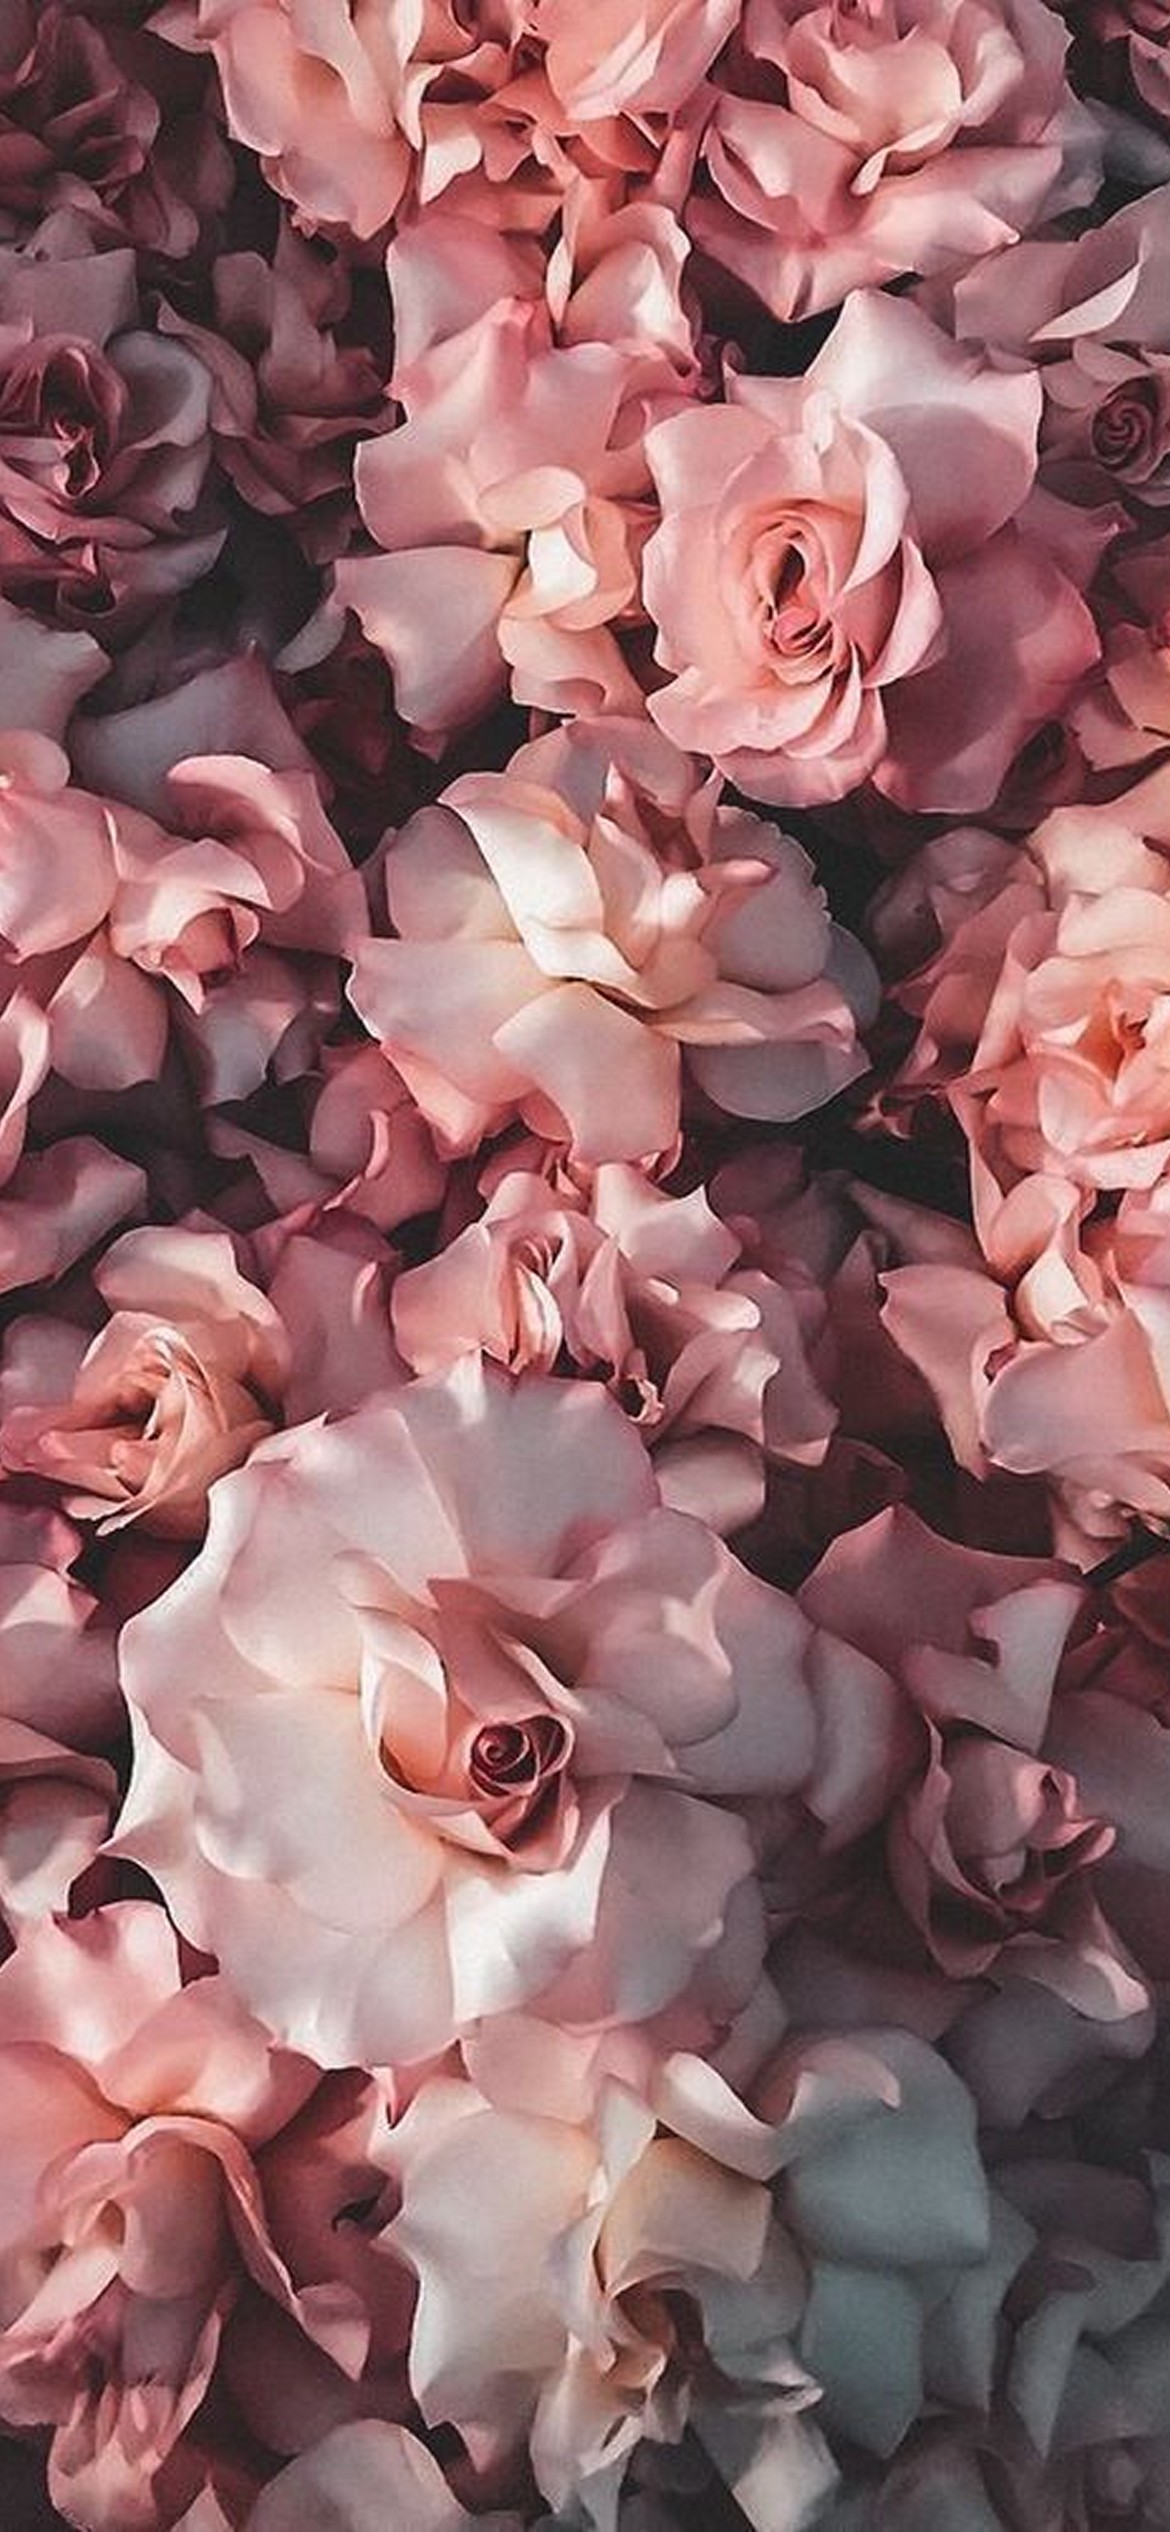 Flower phone wallpaper background, aesthetic | Free Photo - rawpixel